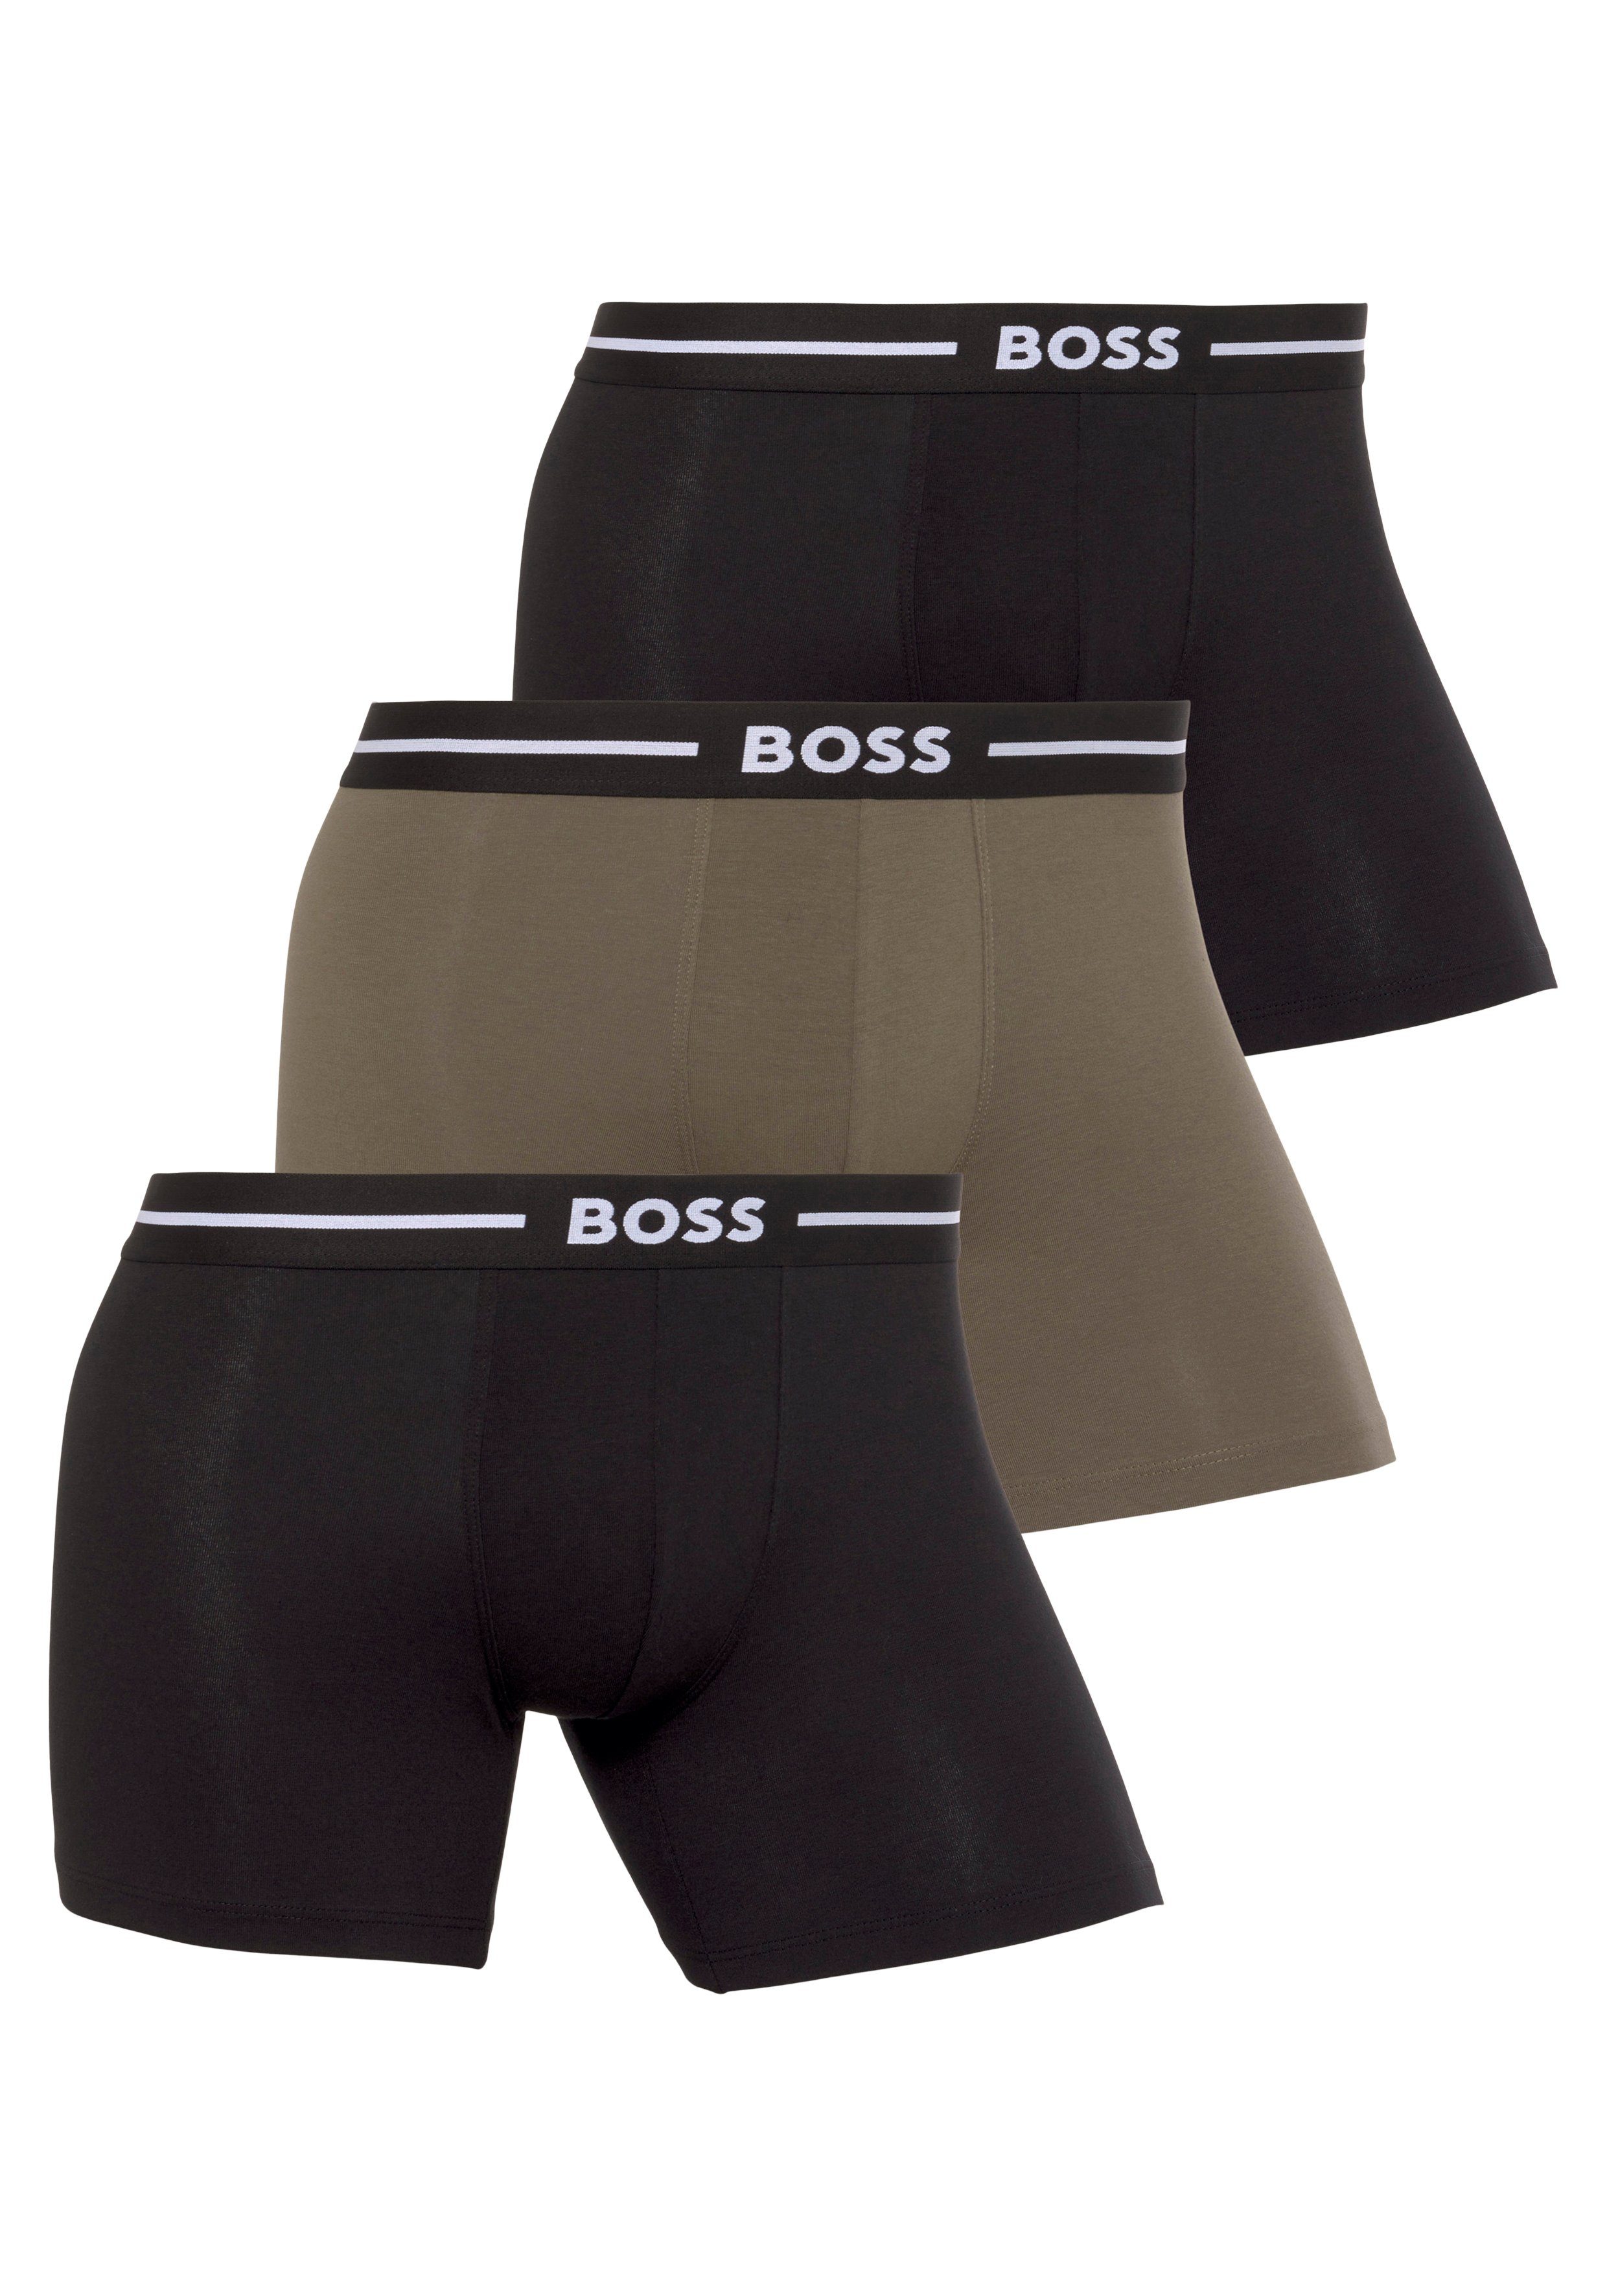 BOSS Boxer mit BOSS Bund 3er 3P Pack) auf BoxerBr Bold dem (Packung, Logo 3-St